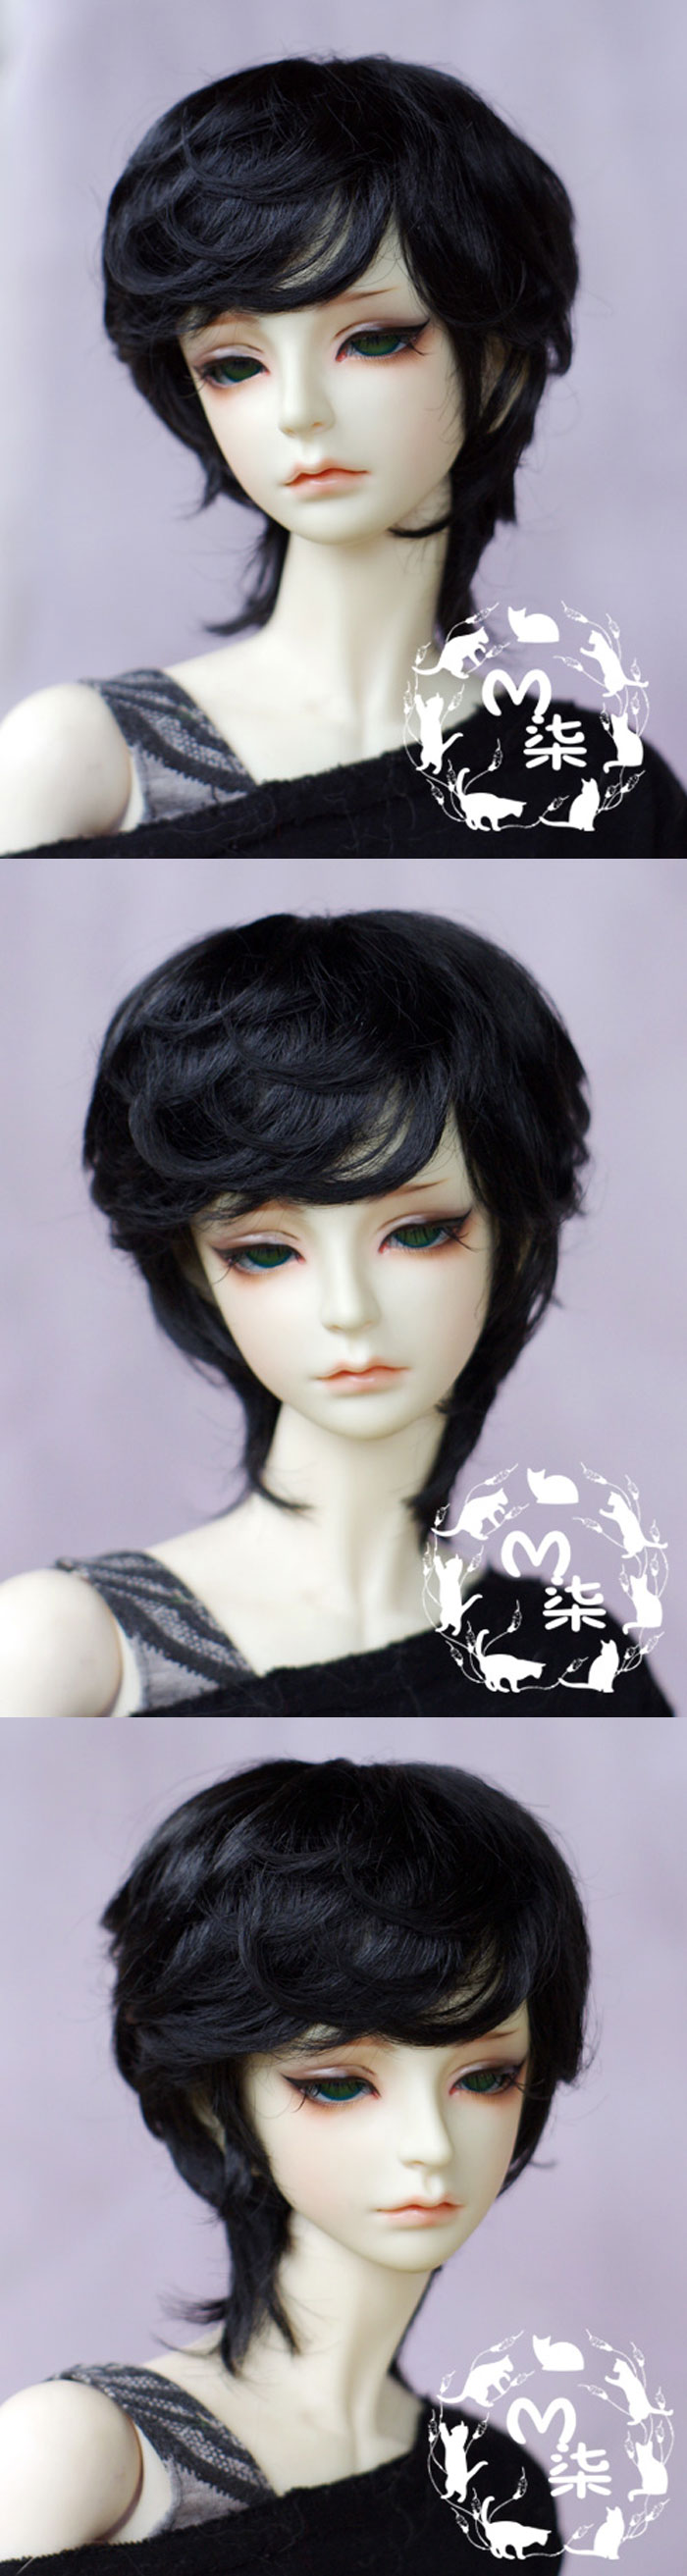 Details about   Black Mini MSD 1/3,9-10inch SD BJD Doll Black Short Curling Hair Wig model 